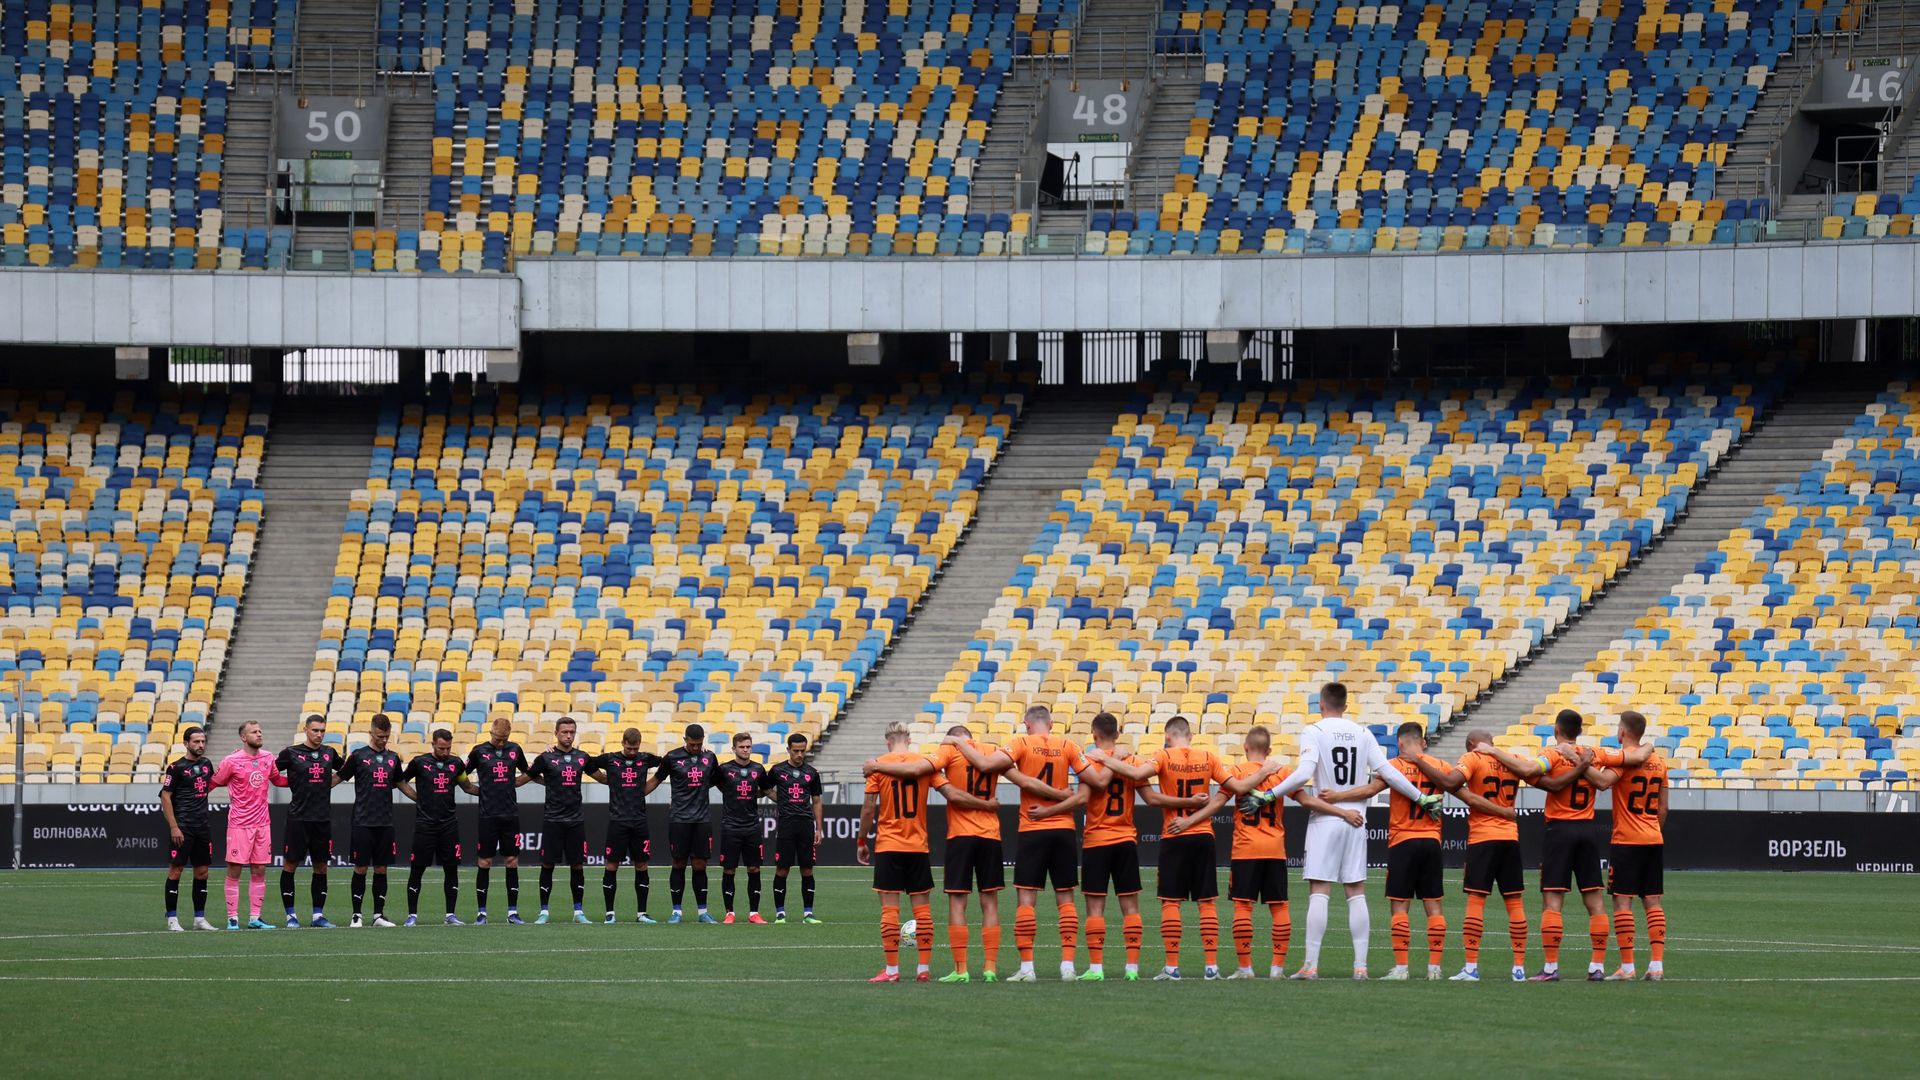 ukrainian premier league teams play in empty stadium